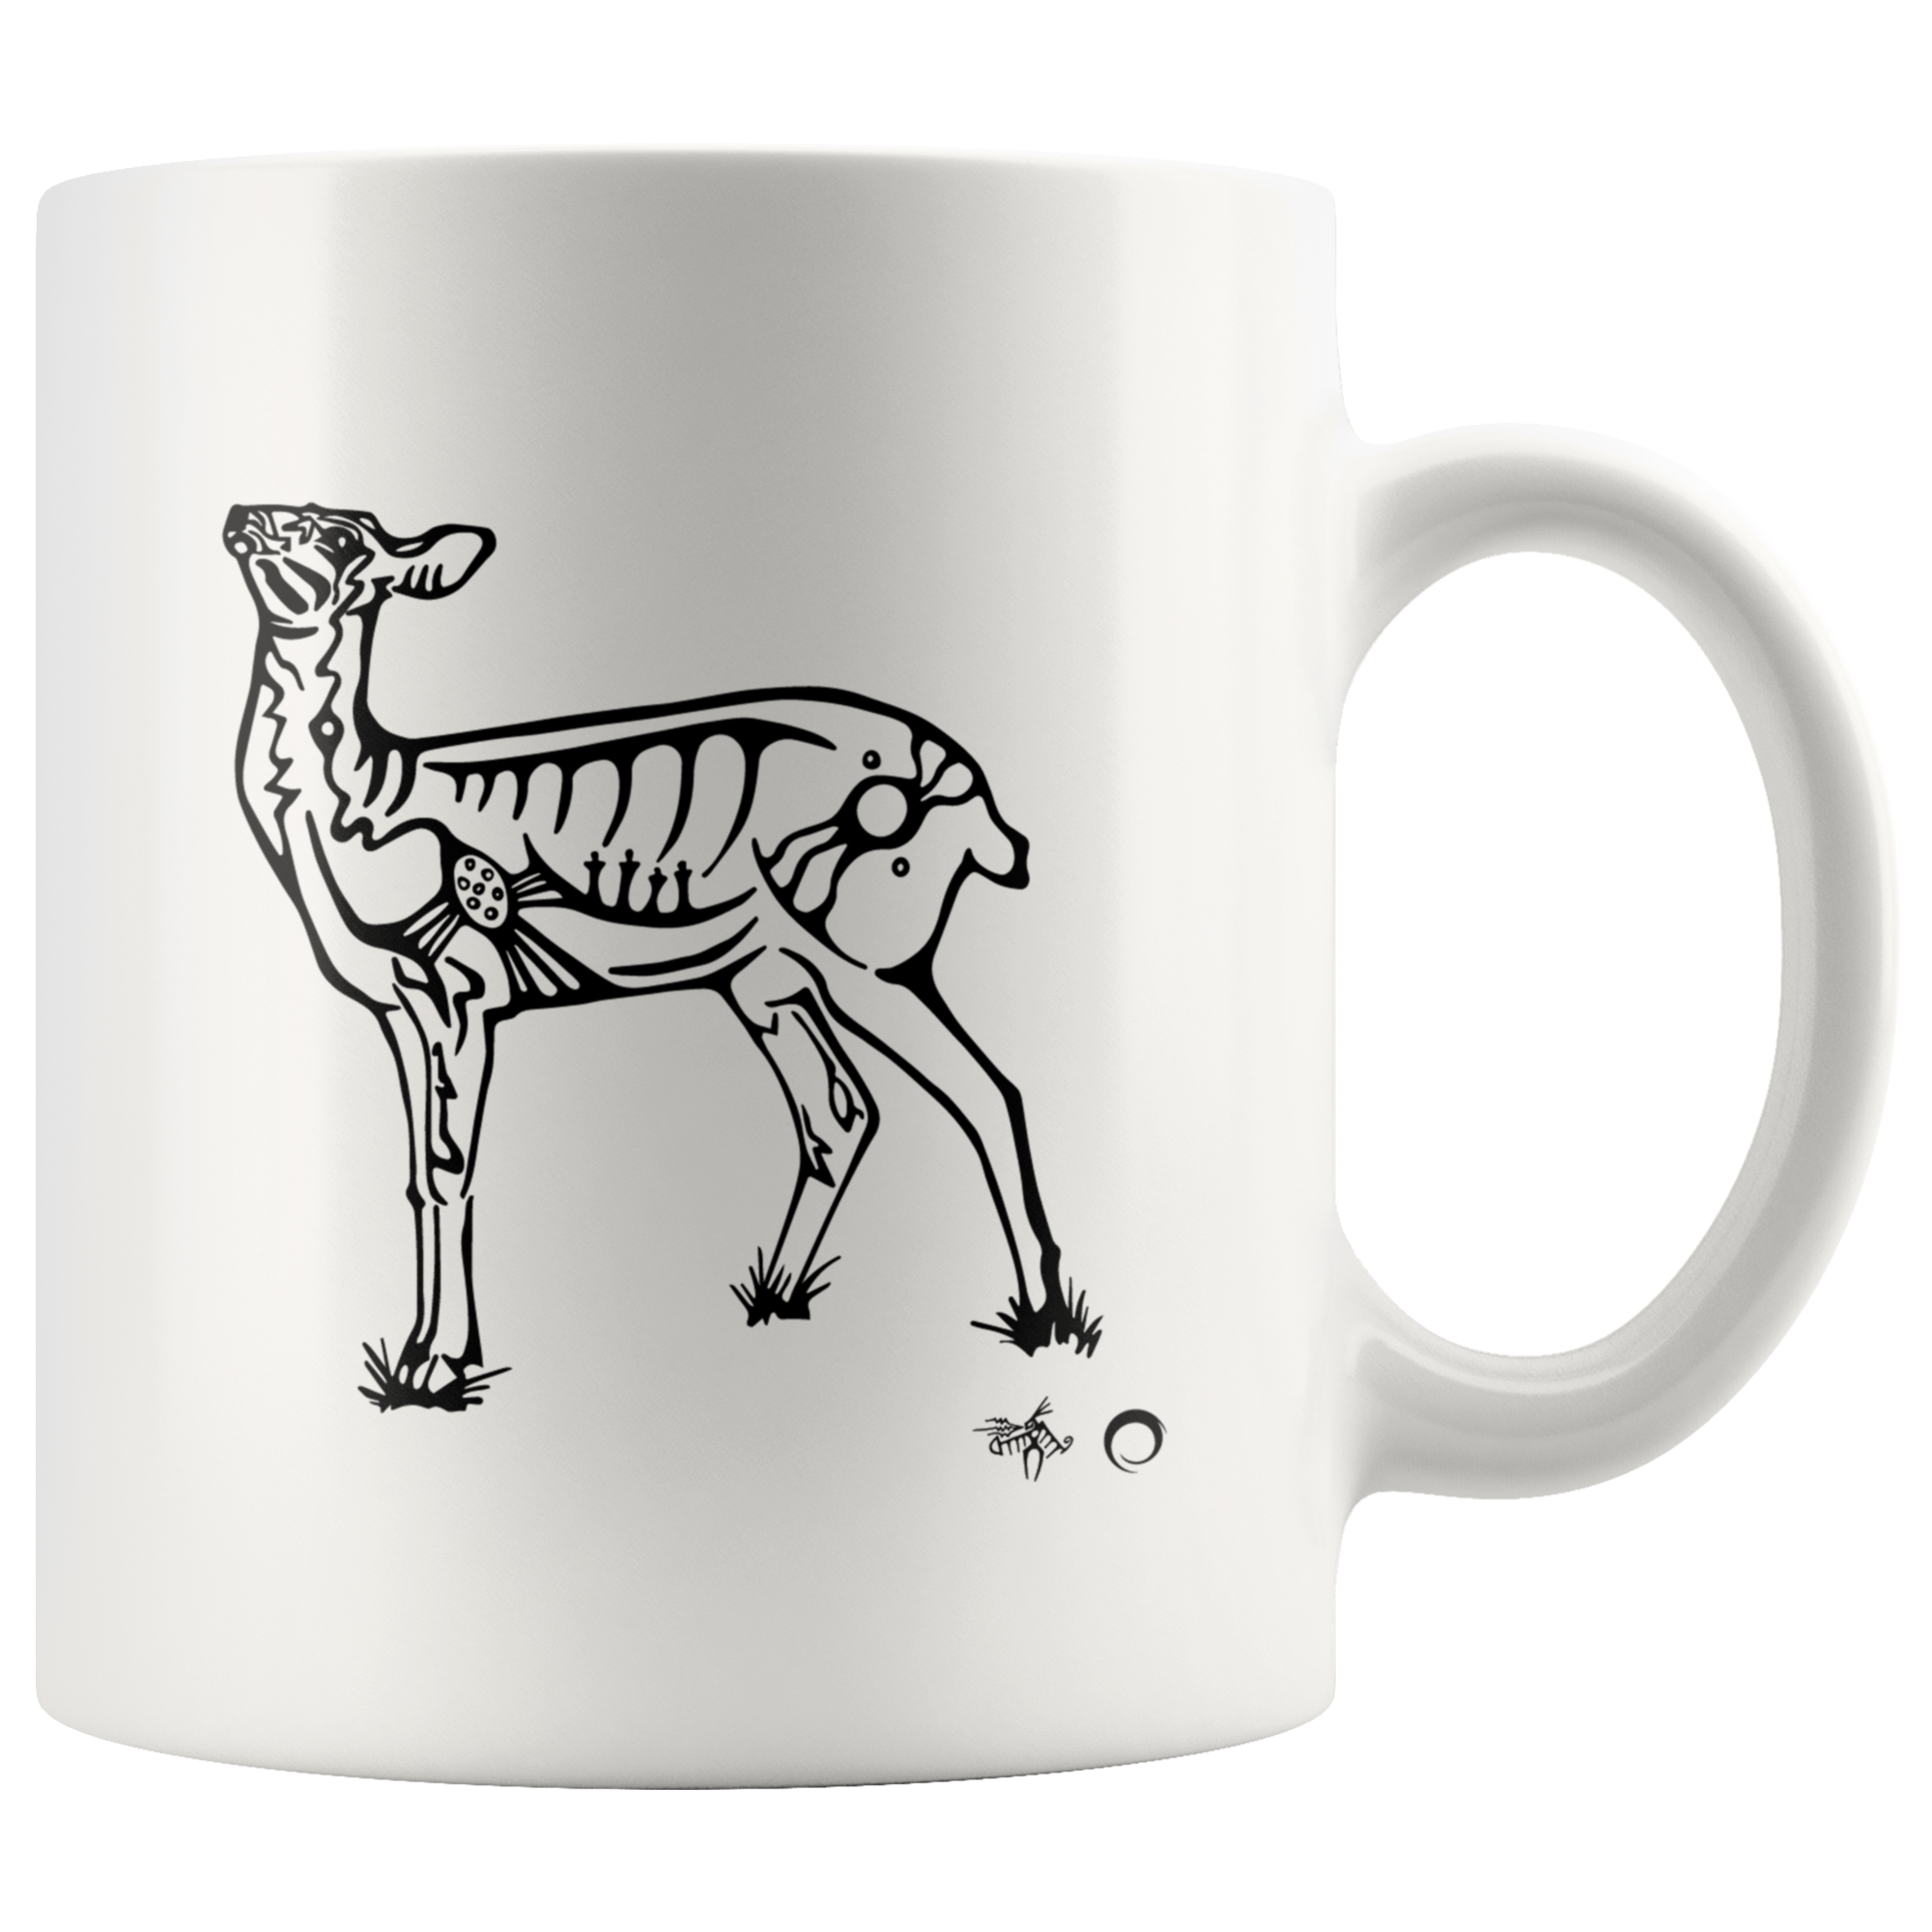 Deer Mug by Miigizi